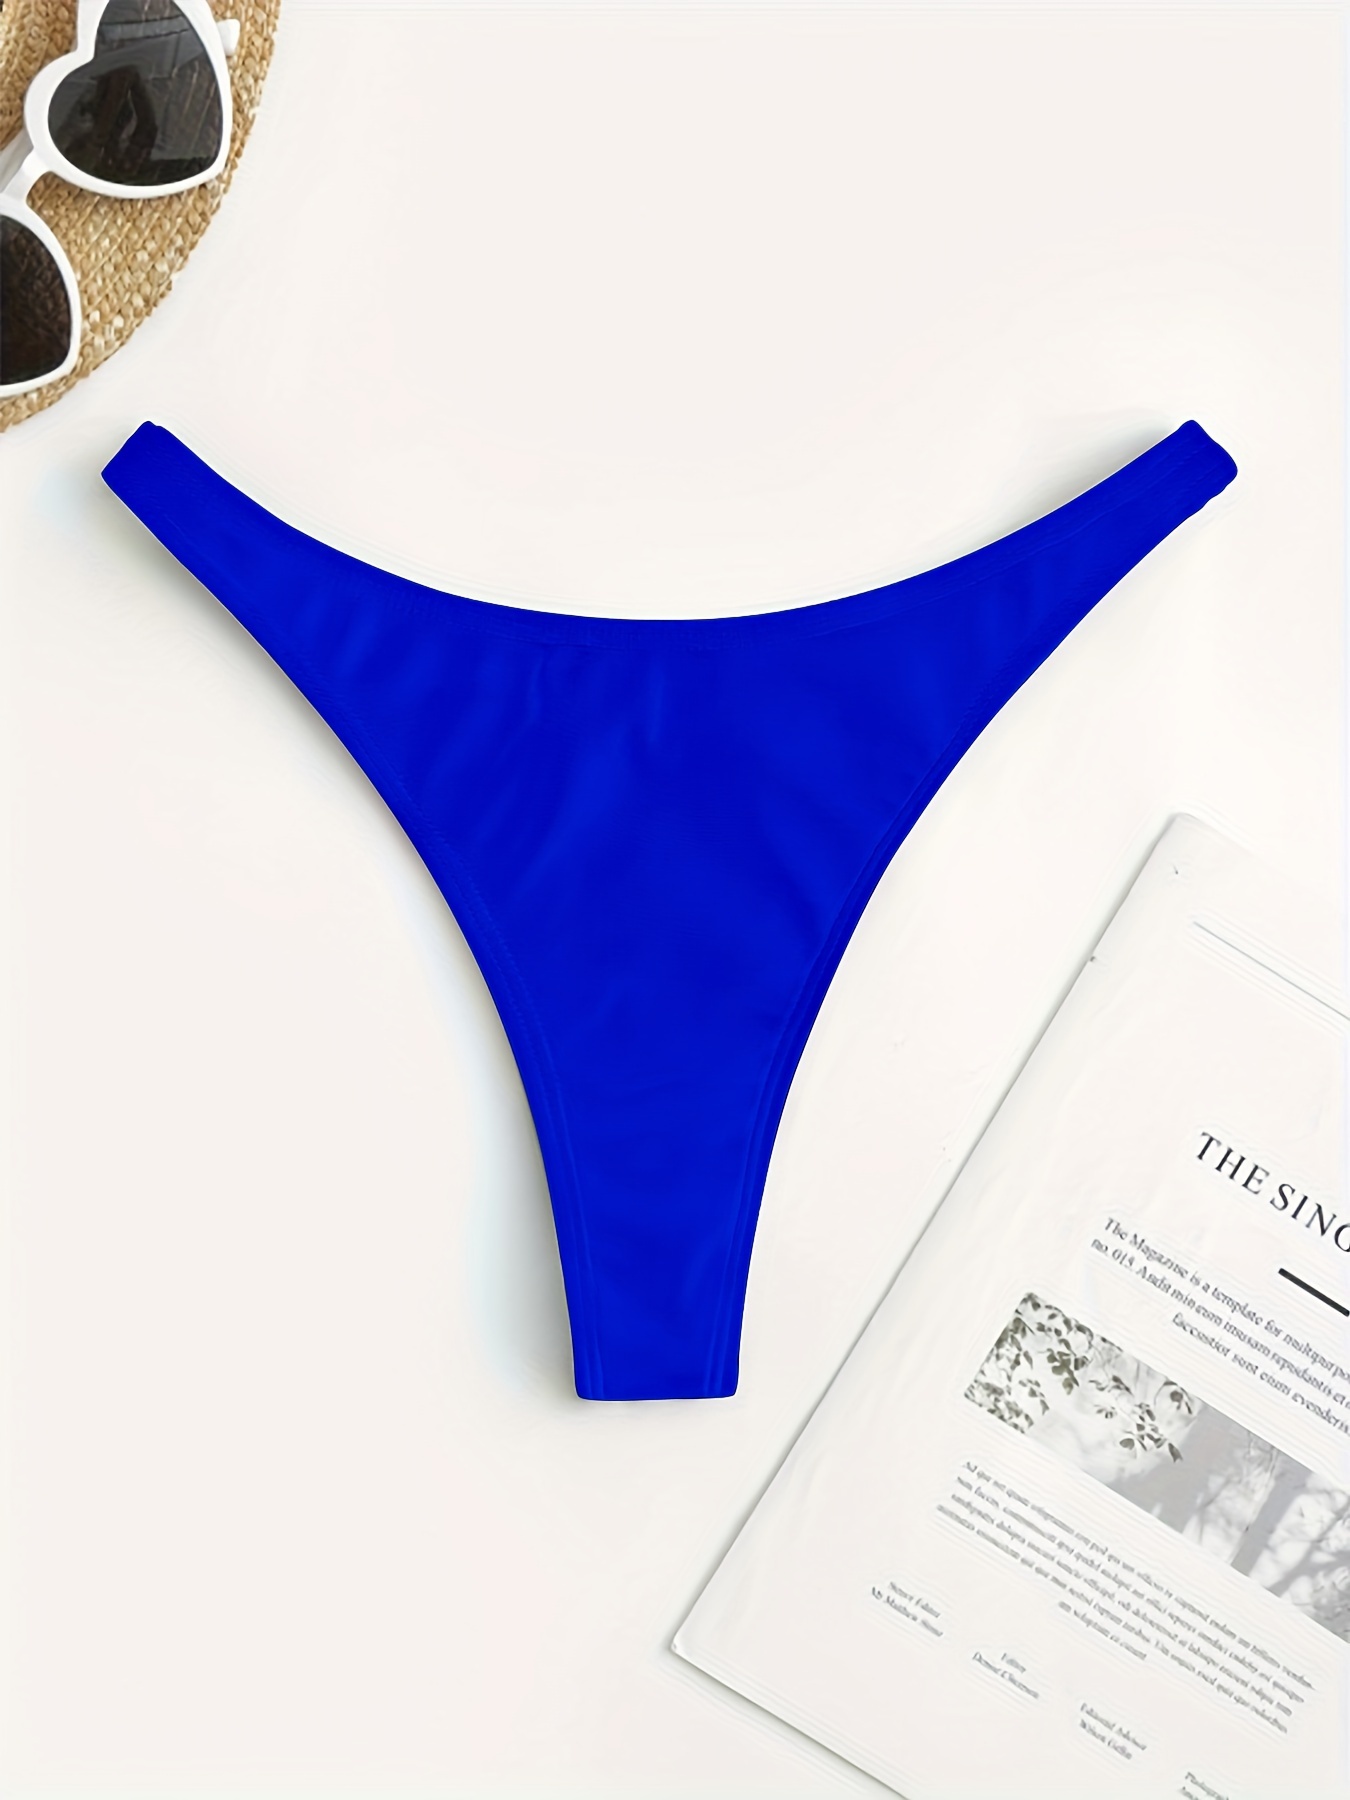 Swim Brief for Women - Brief Bikini Bottom